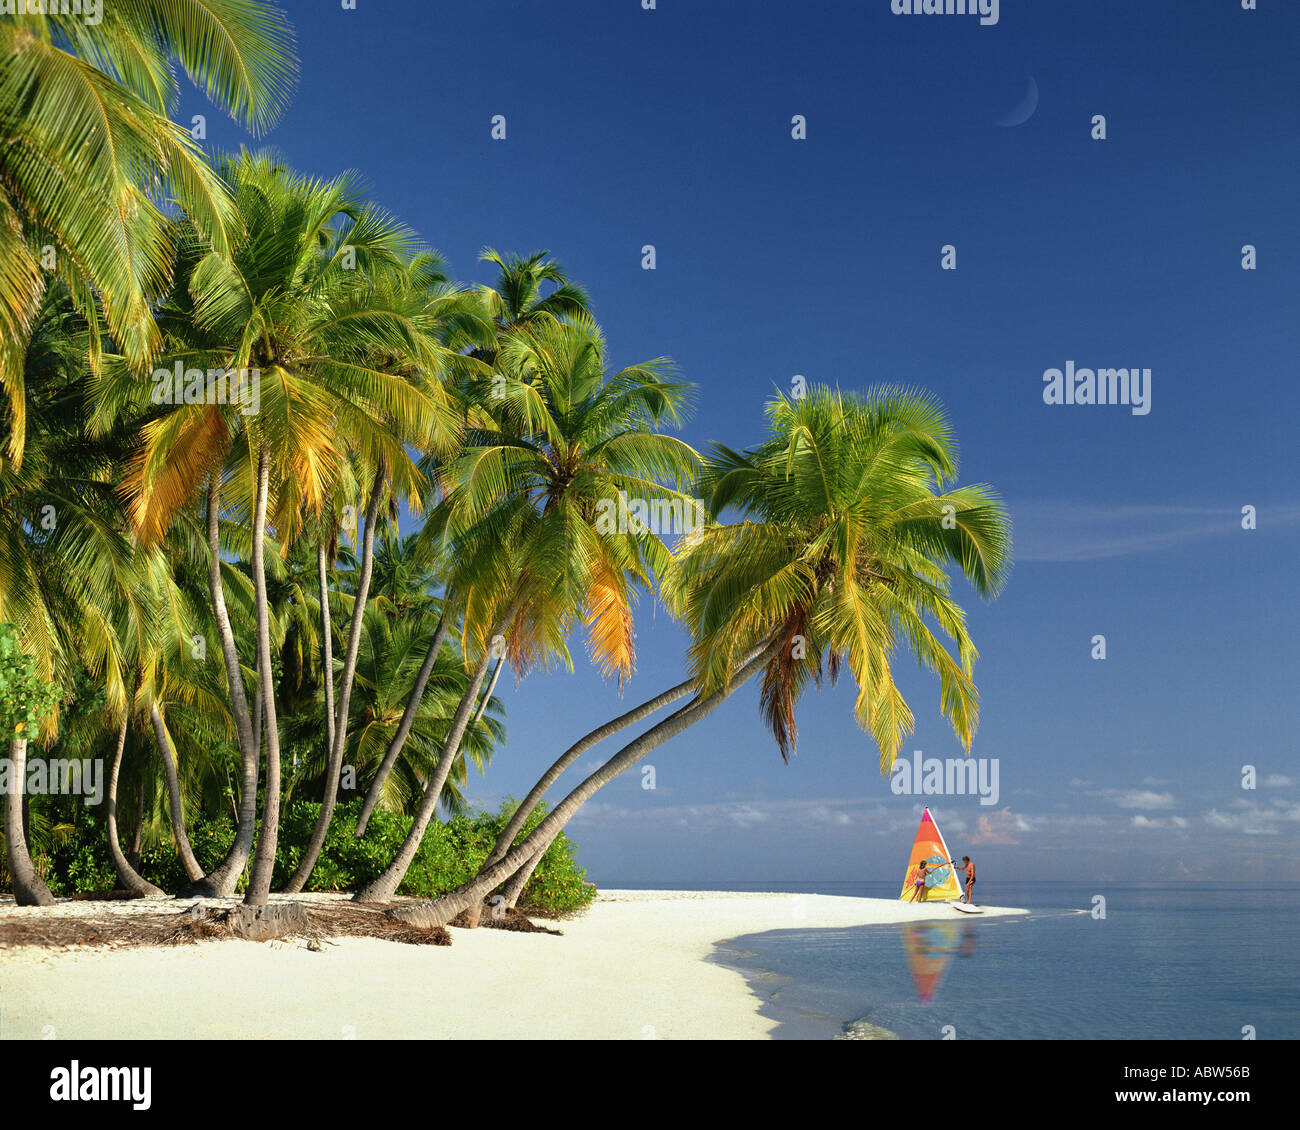 MV - MALDIVE ISLANDS: Beach along the Indian Ocean Stock Photo